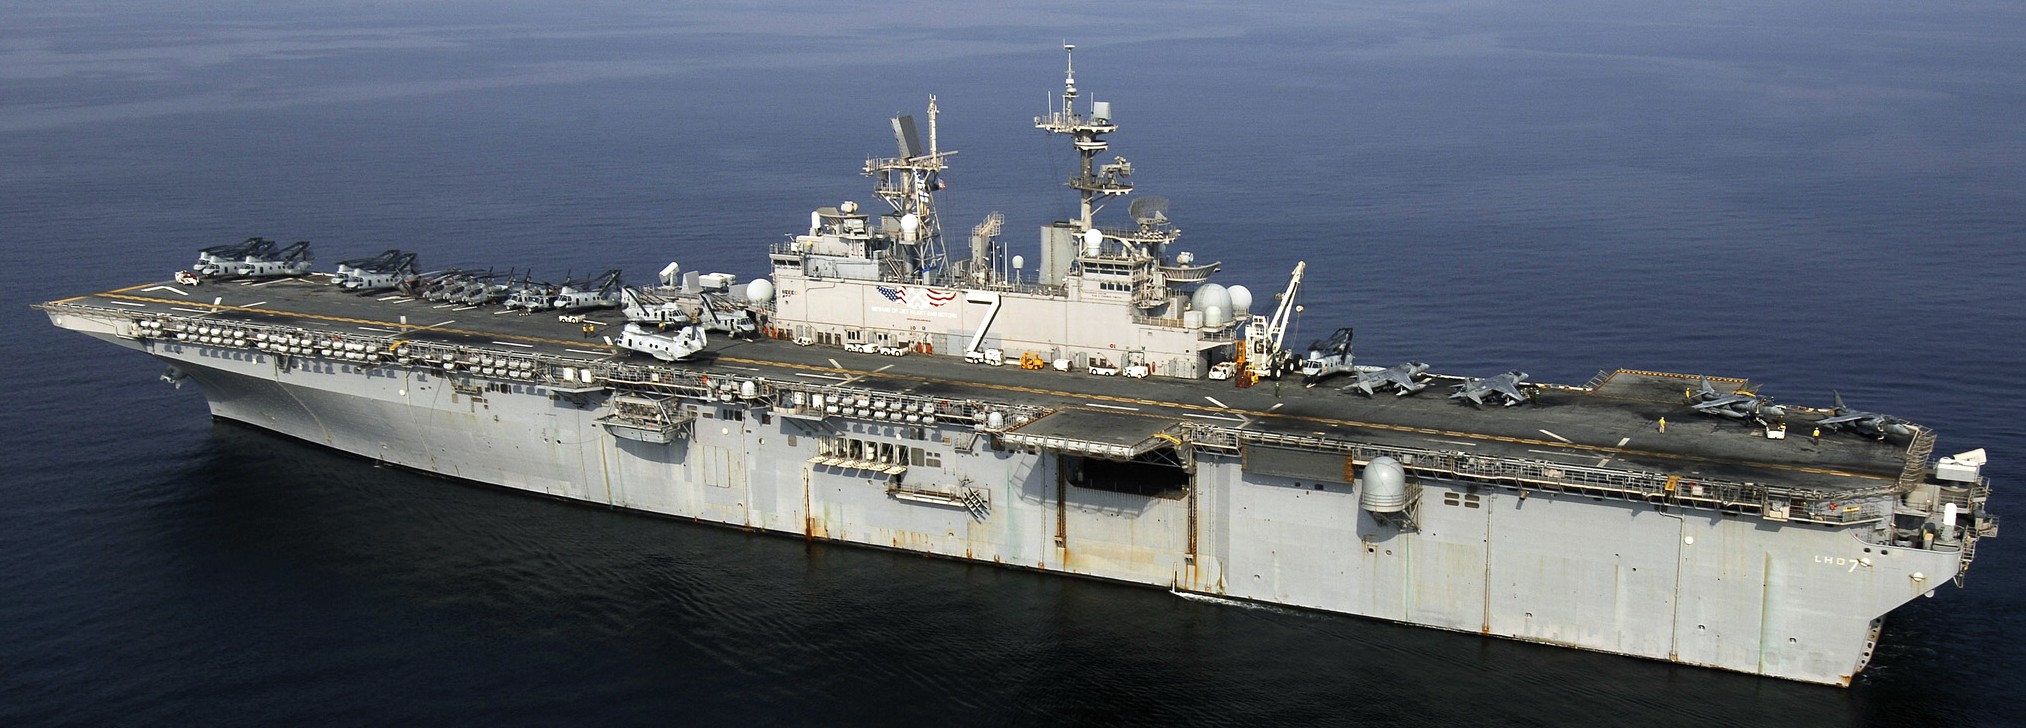 lhd-7 uss iwo jima wasp class amphibious assault ship dock landing helicopter us navy hmm-264 marines 55